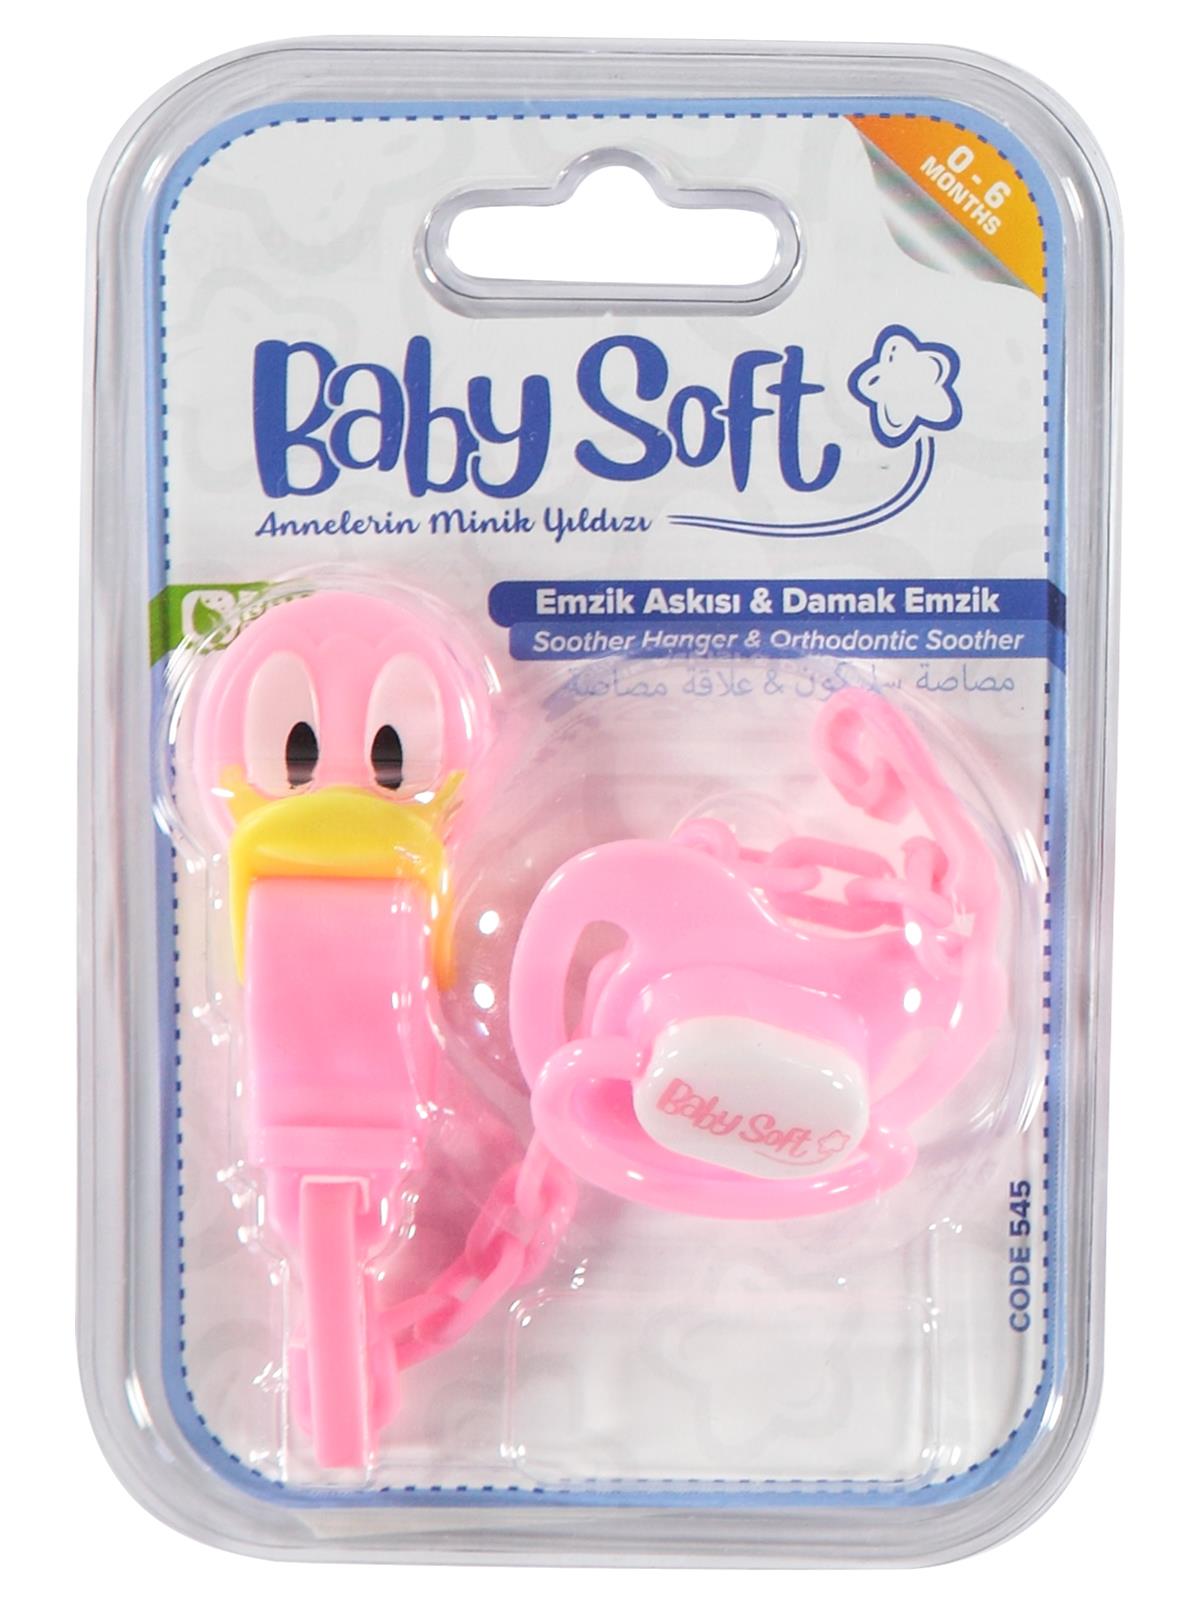 Baby Soft Askılı Silikon Damaklı Emzik 0-6 Ay Pembe-Sarı